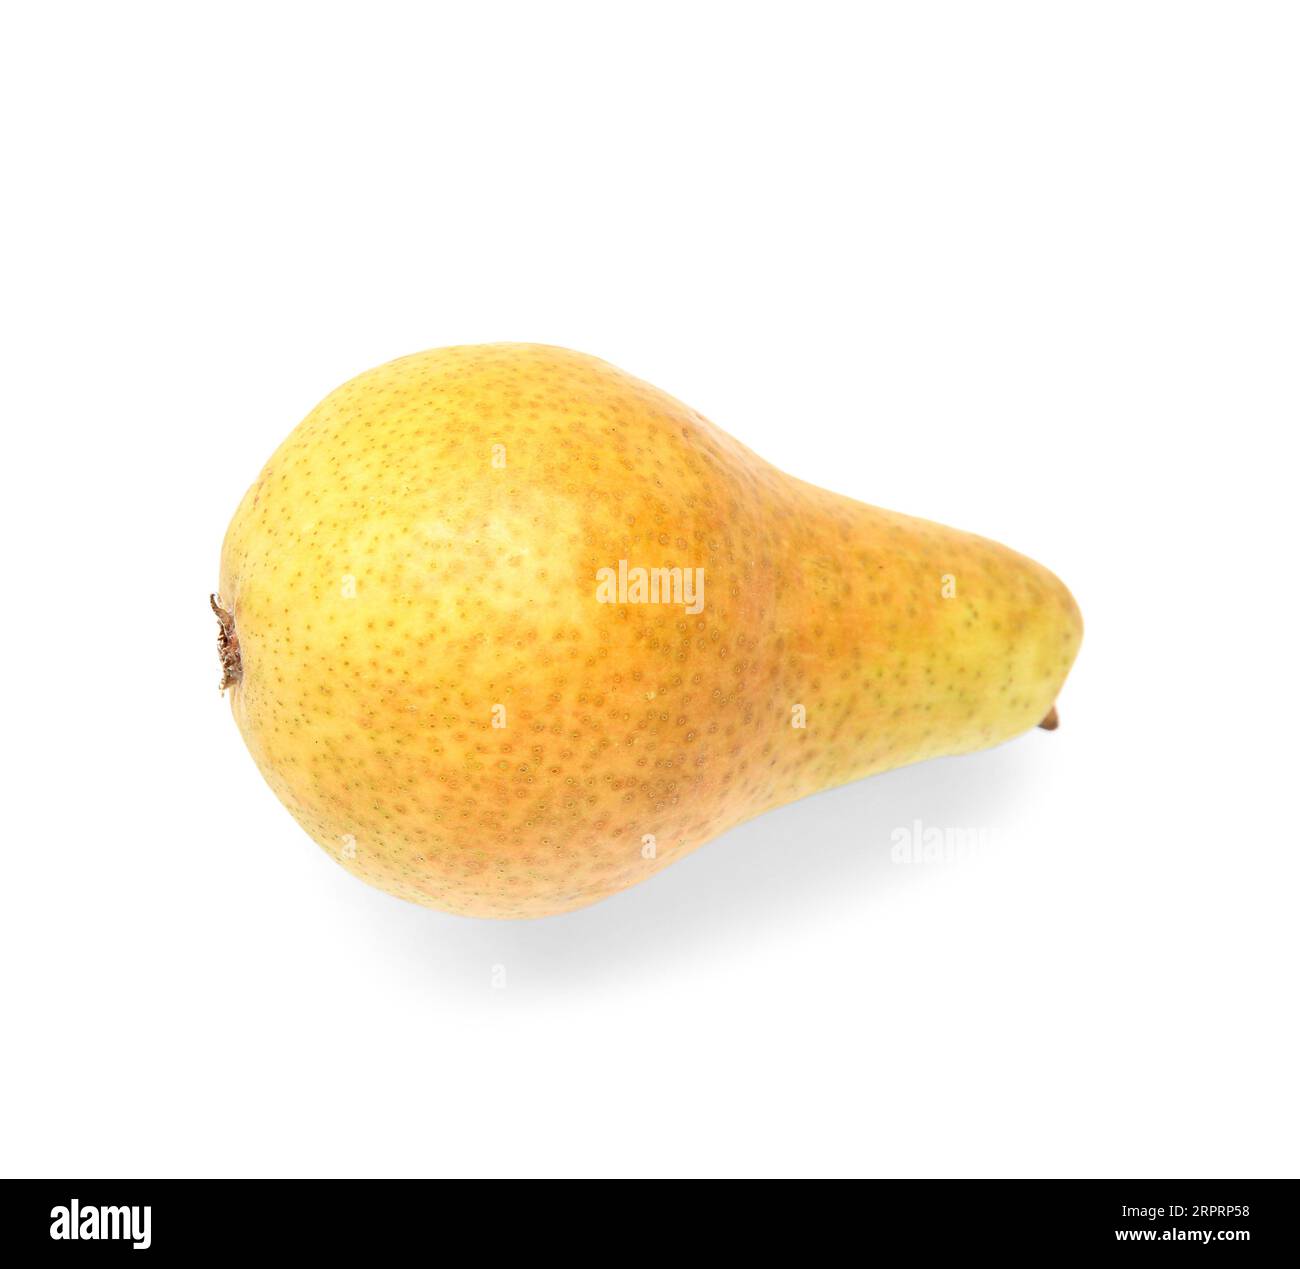 https://c8.alamy.com/comp/2RPRP58/ripe-pear-on-white-background-2RPRP58.jpg